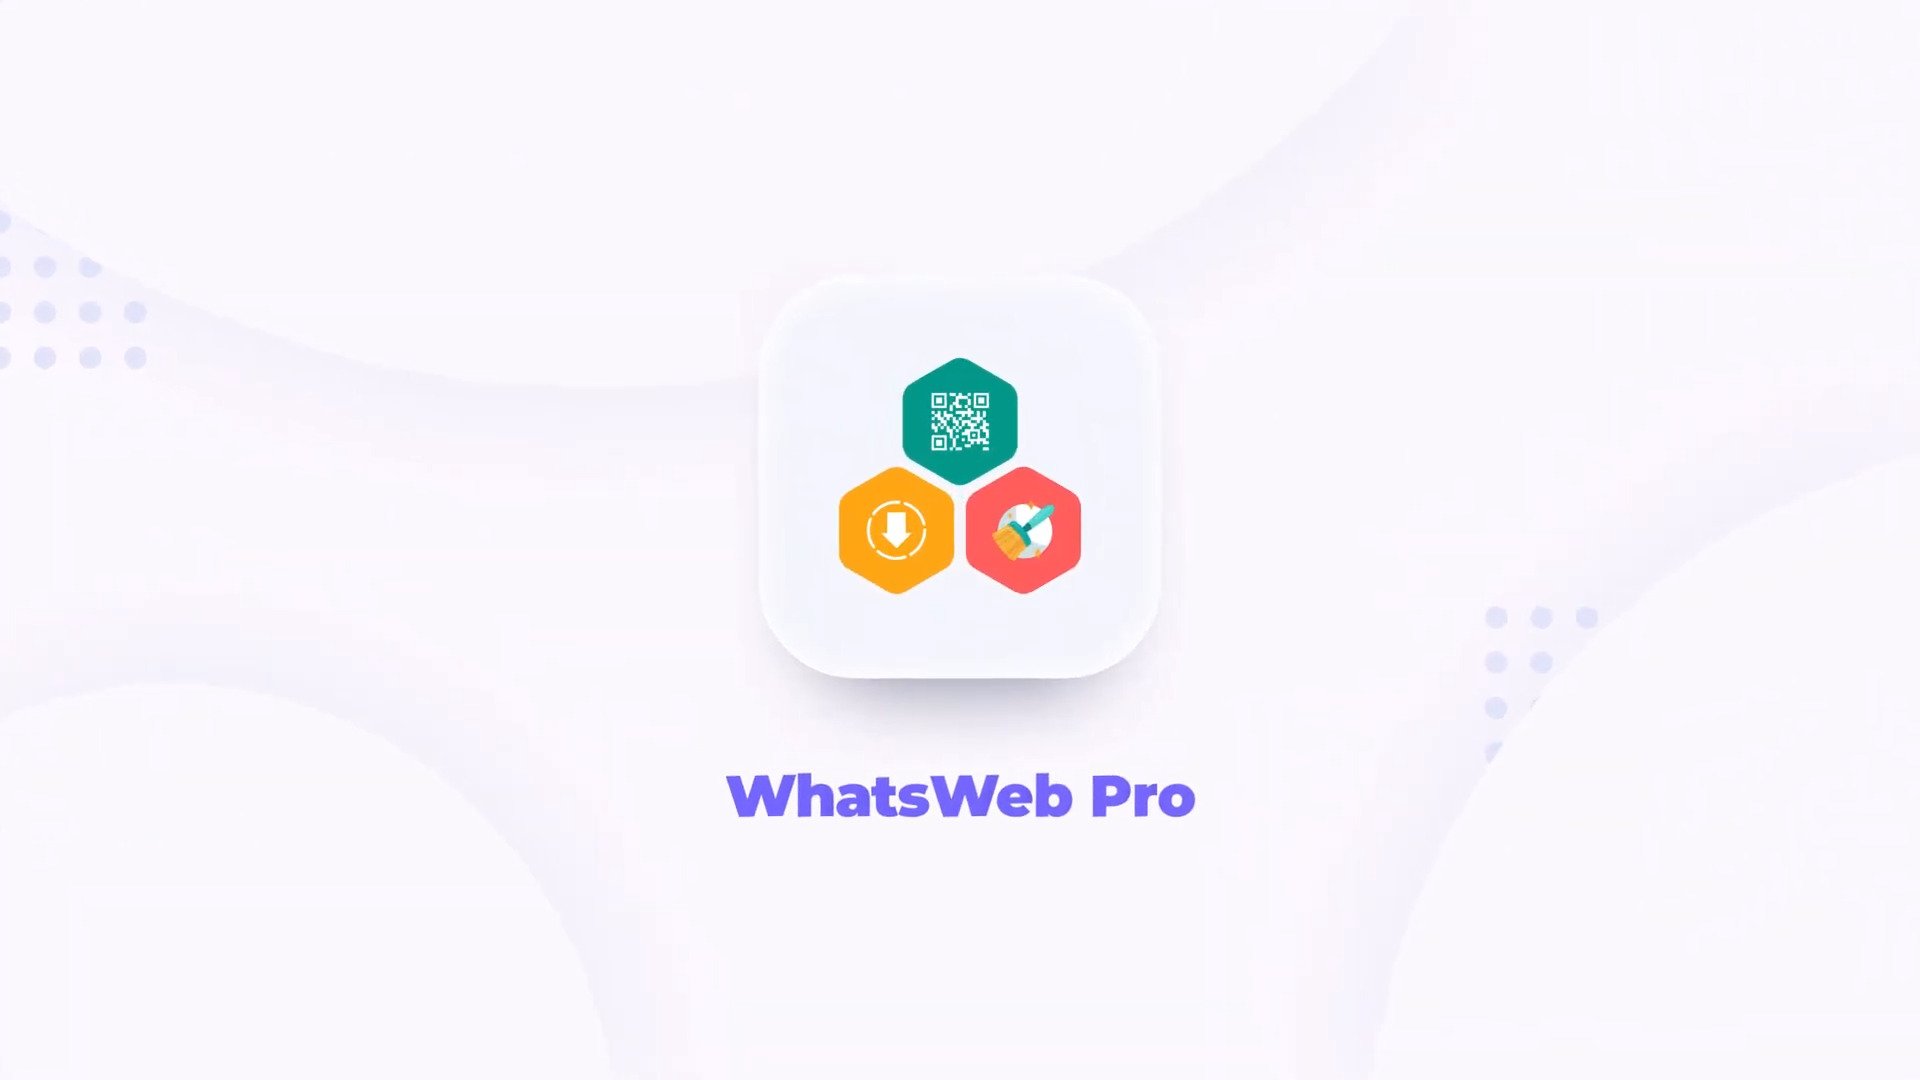 WhatsWeb Pro